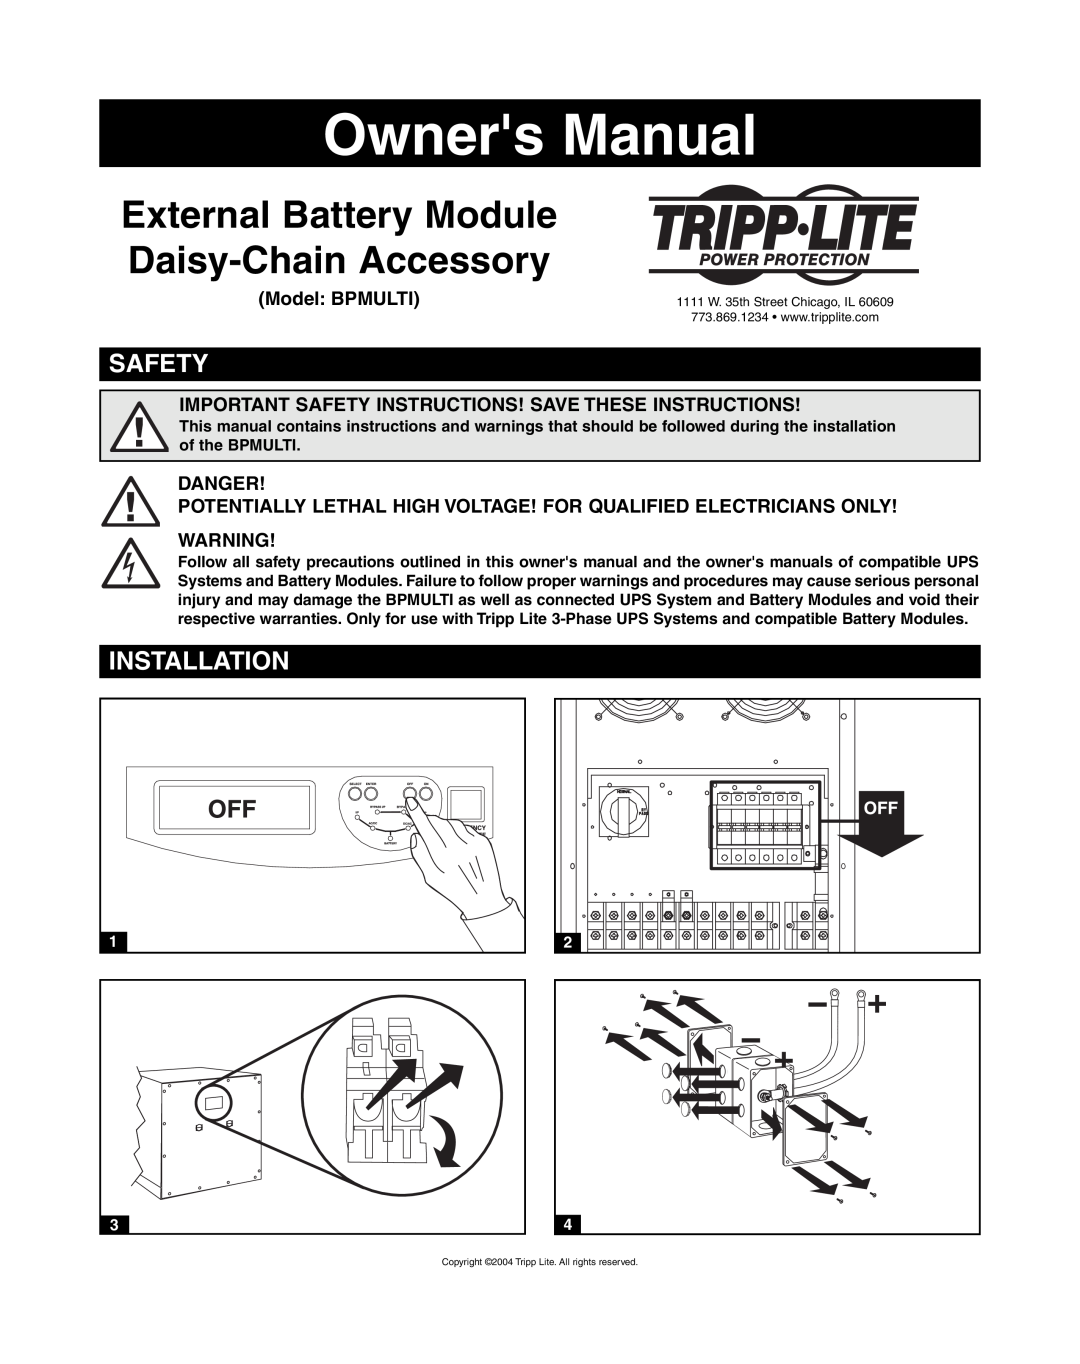 Tripp Lite owner manual Safety, Installation, External Battery Module Daisy-Chain Accessory, Model BPMULTI, Danger 